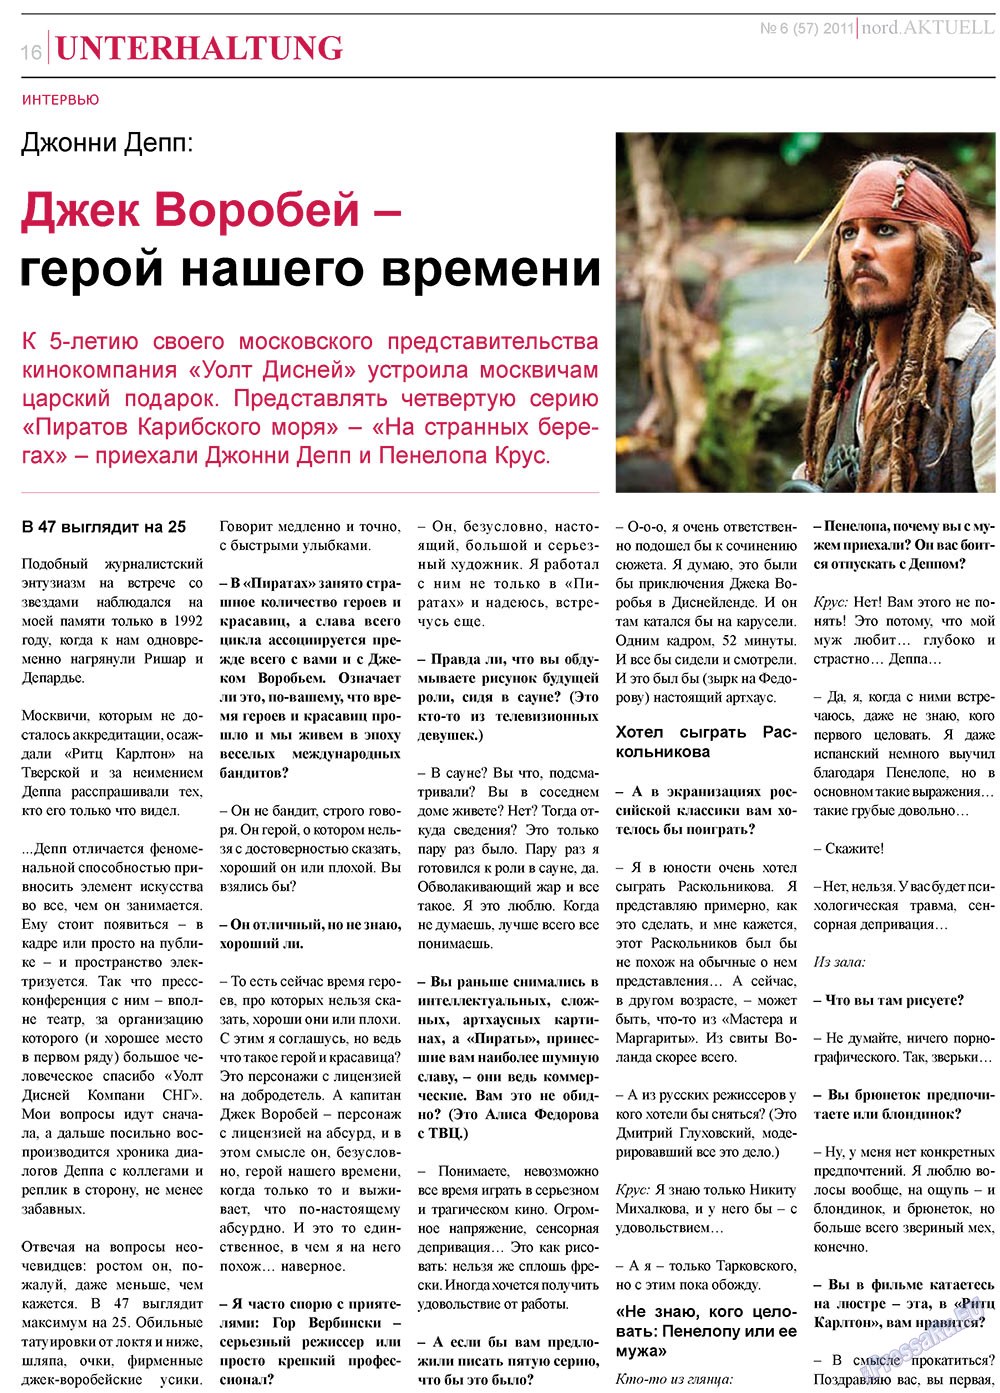 nord.Aktuell, газета. 2011 №6 стр.16